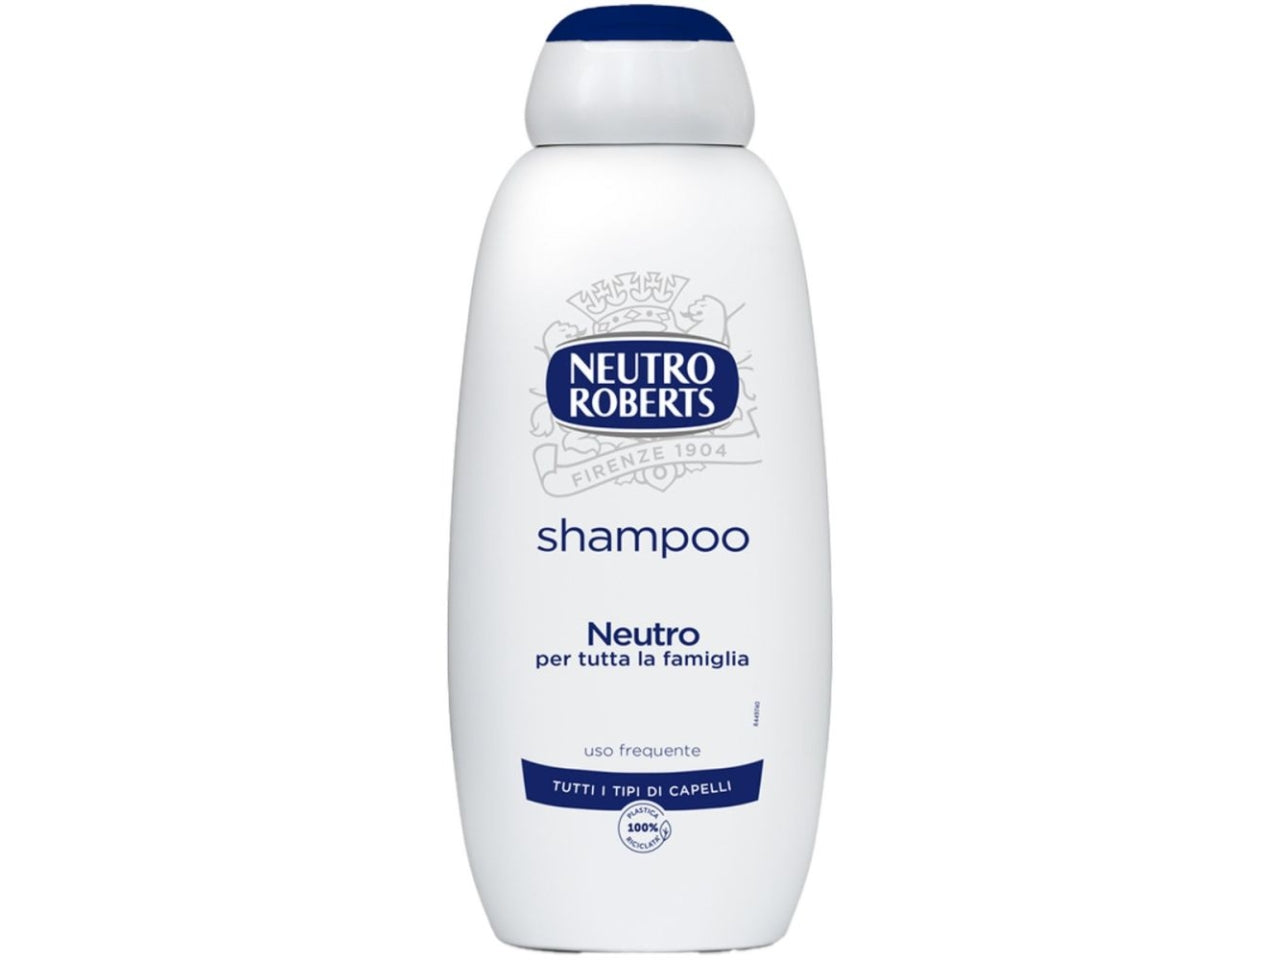 Shampoo Neutro Roberts Protezione Quotidiana 450ml $